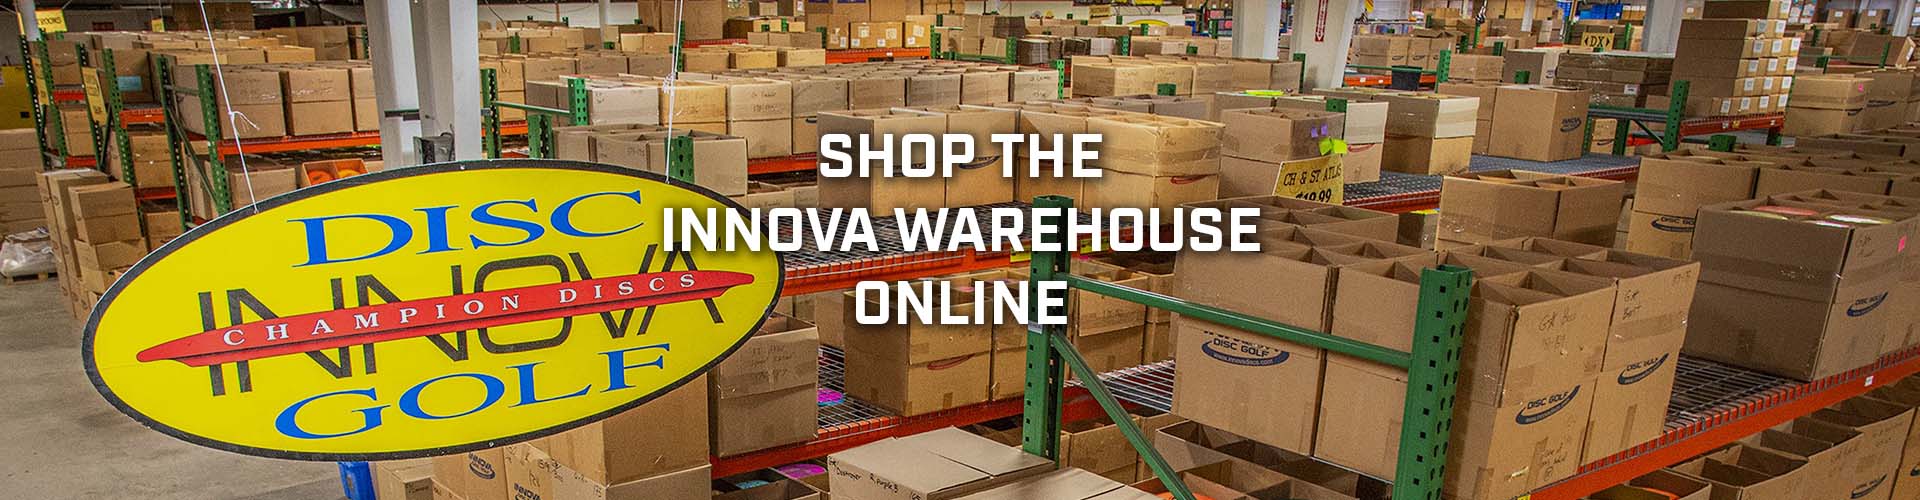 shop the innova warehouse online